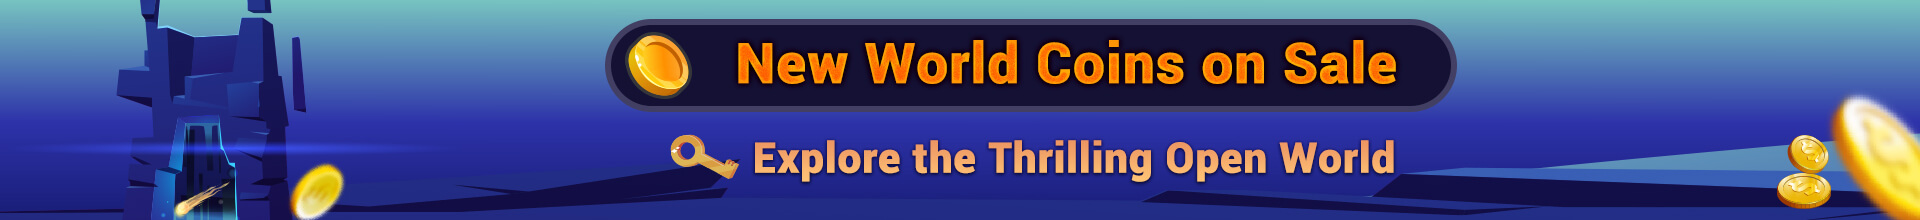 New World coins banner